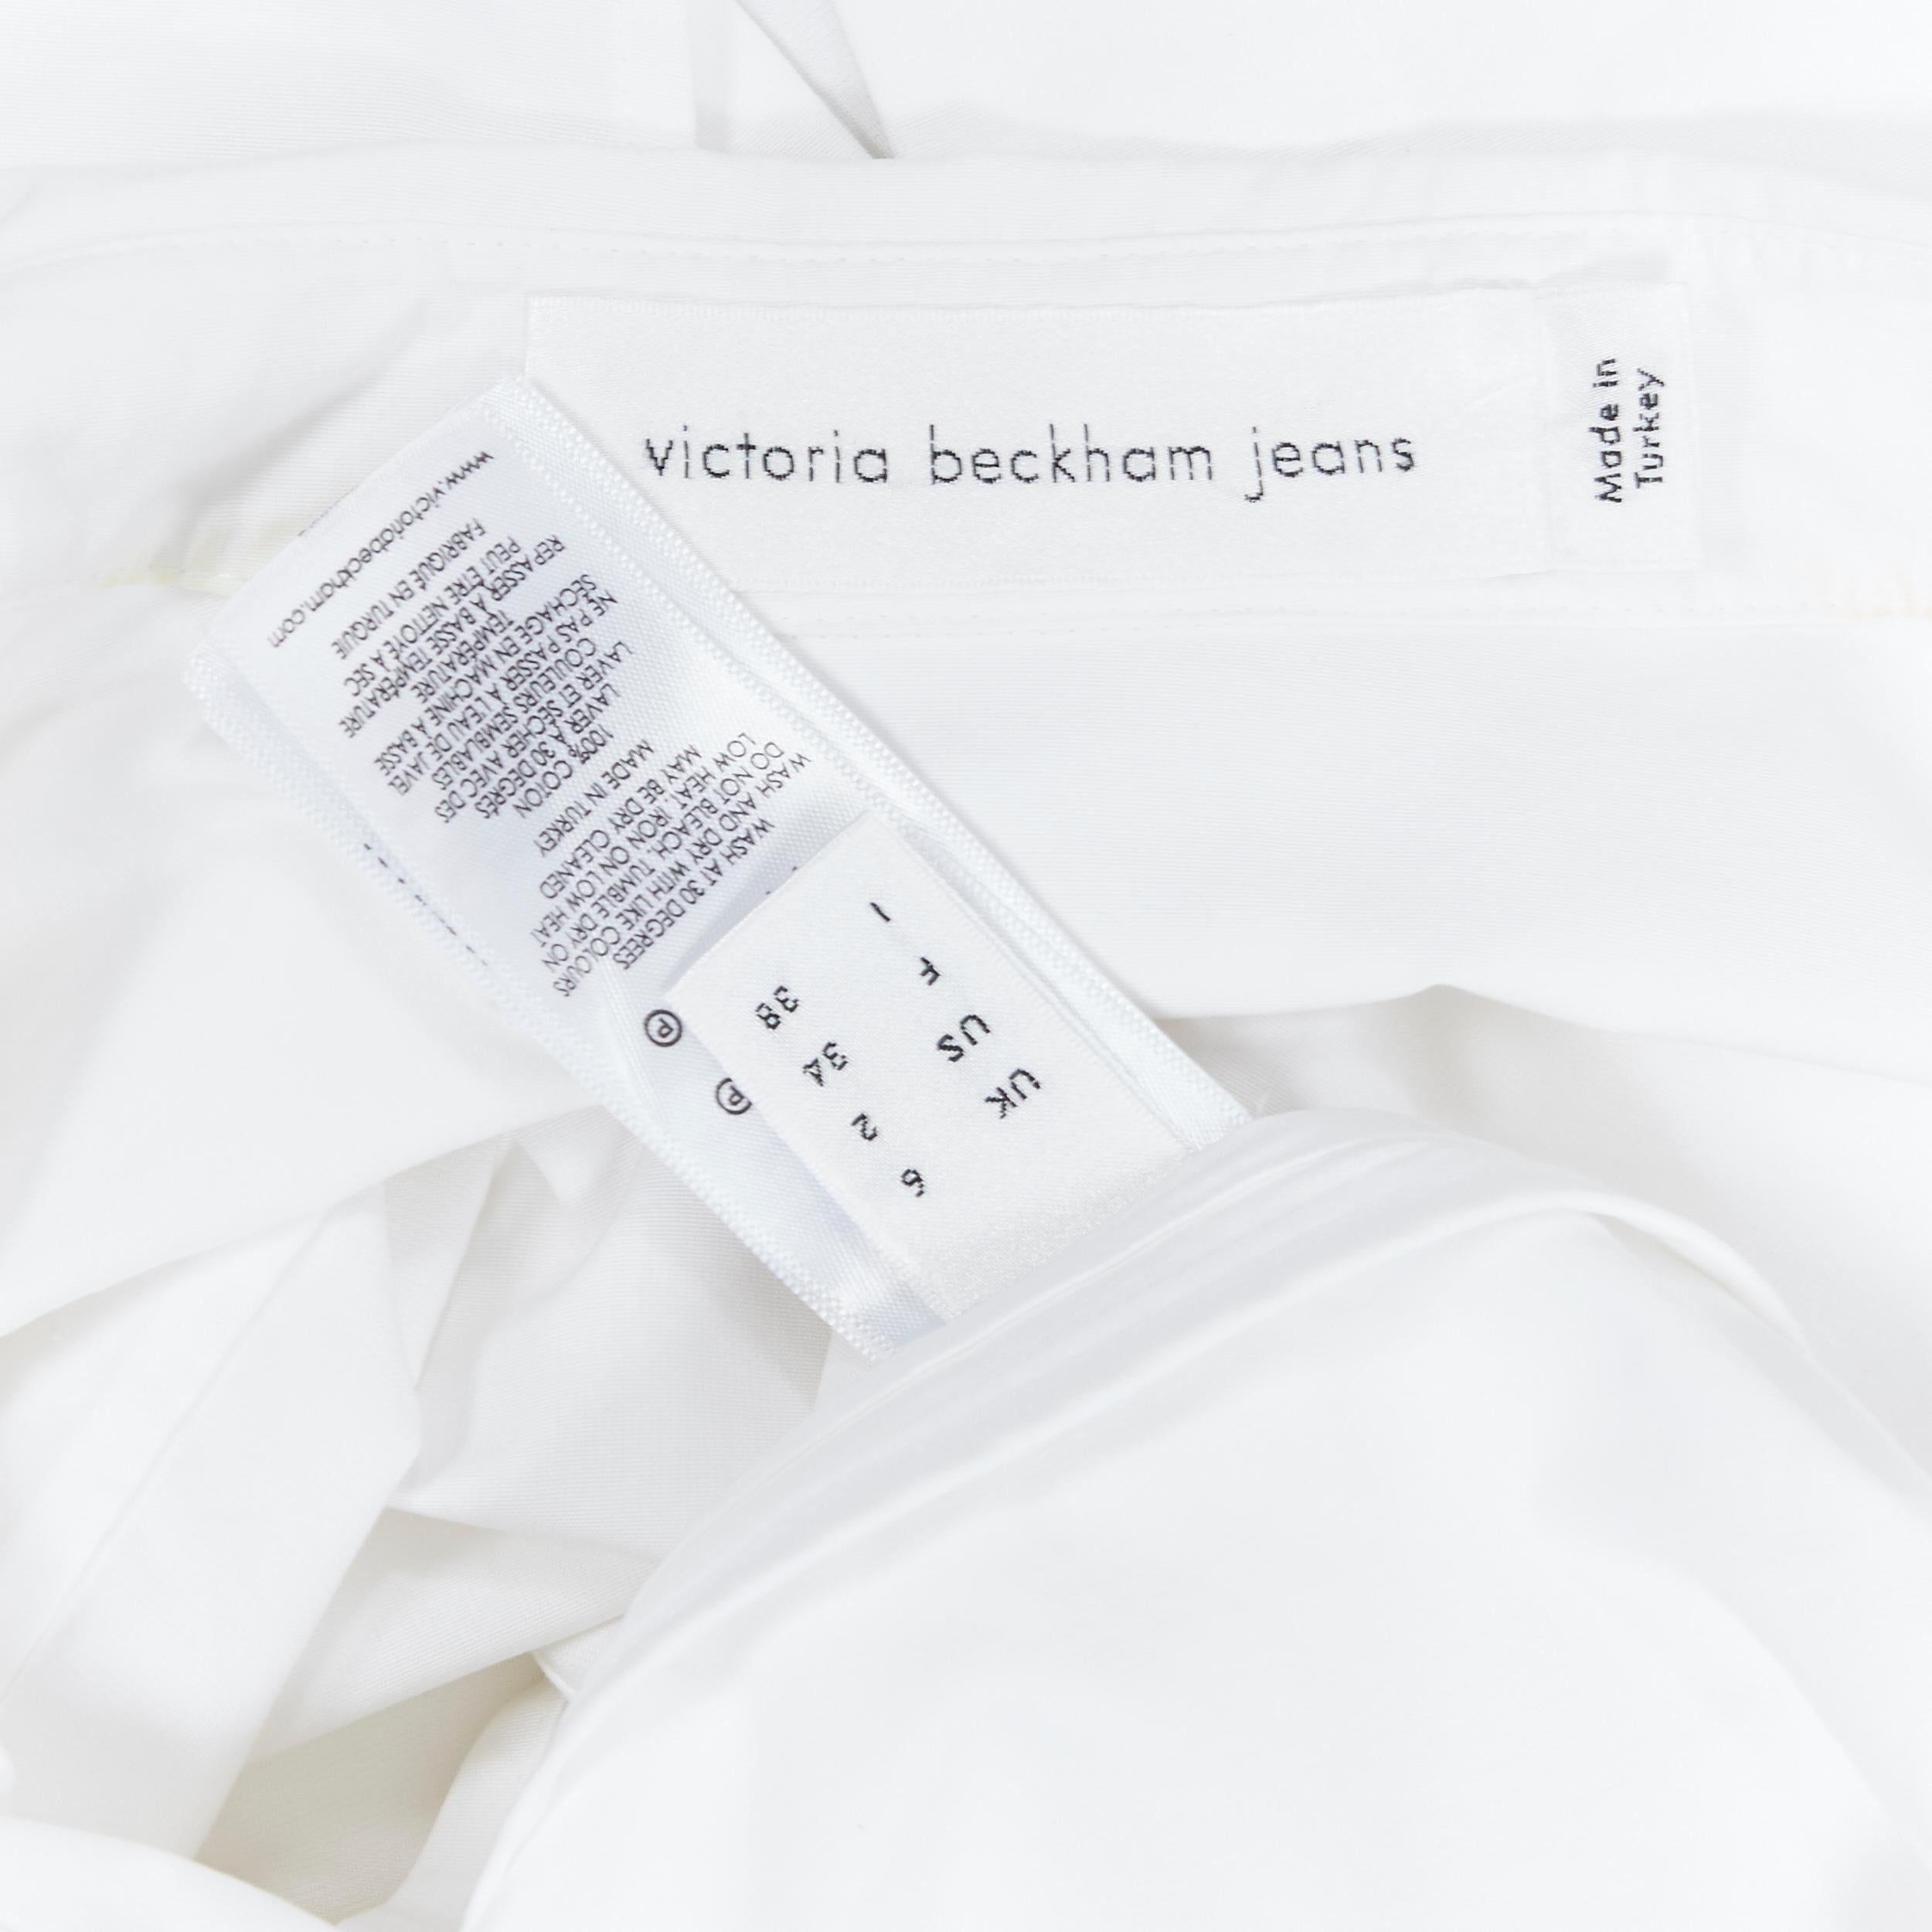 VICTORIA BECKHAM JEANS white cotton splt open back sleeveless shirt UK6 3